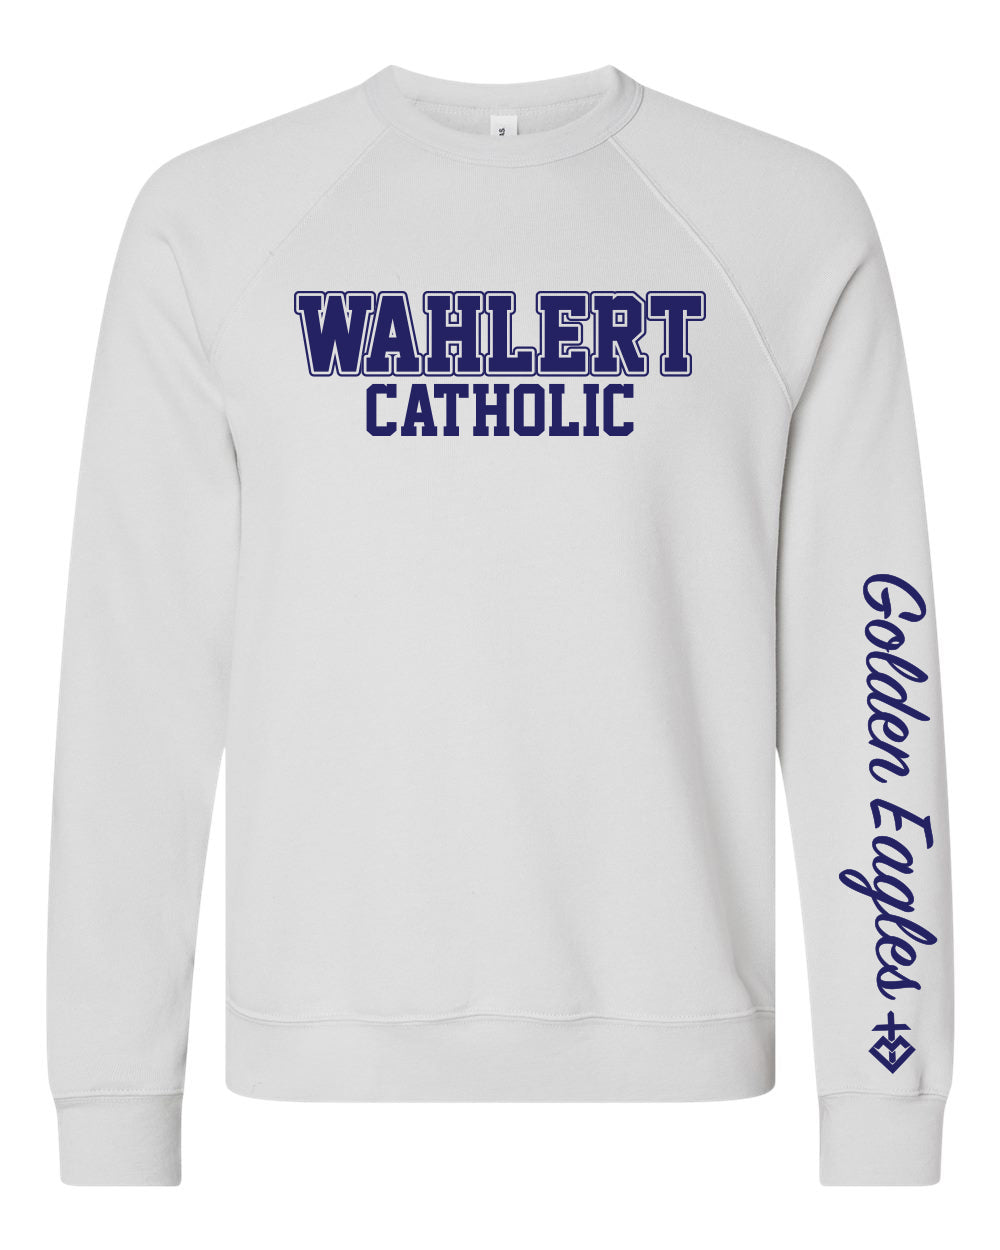 3901 - WAHLERT CATHOLIC BLOCK SPIRIT - Adult BELLA CANVAS Raglan Crewneck Sweatshirt